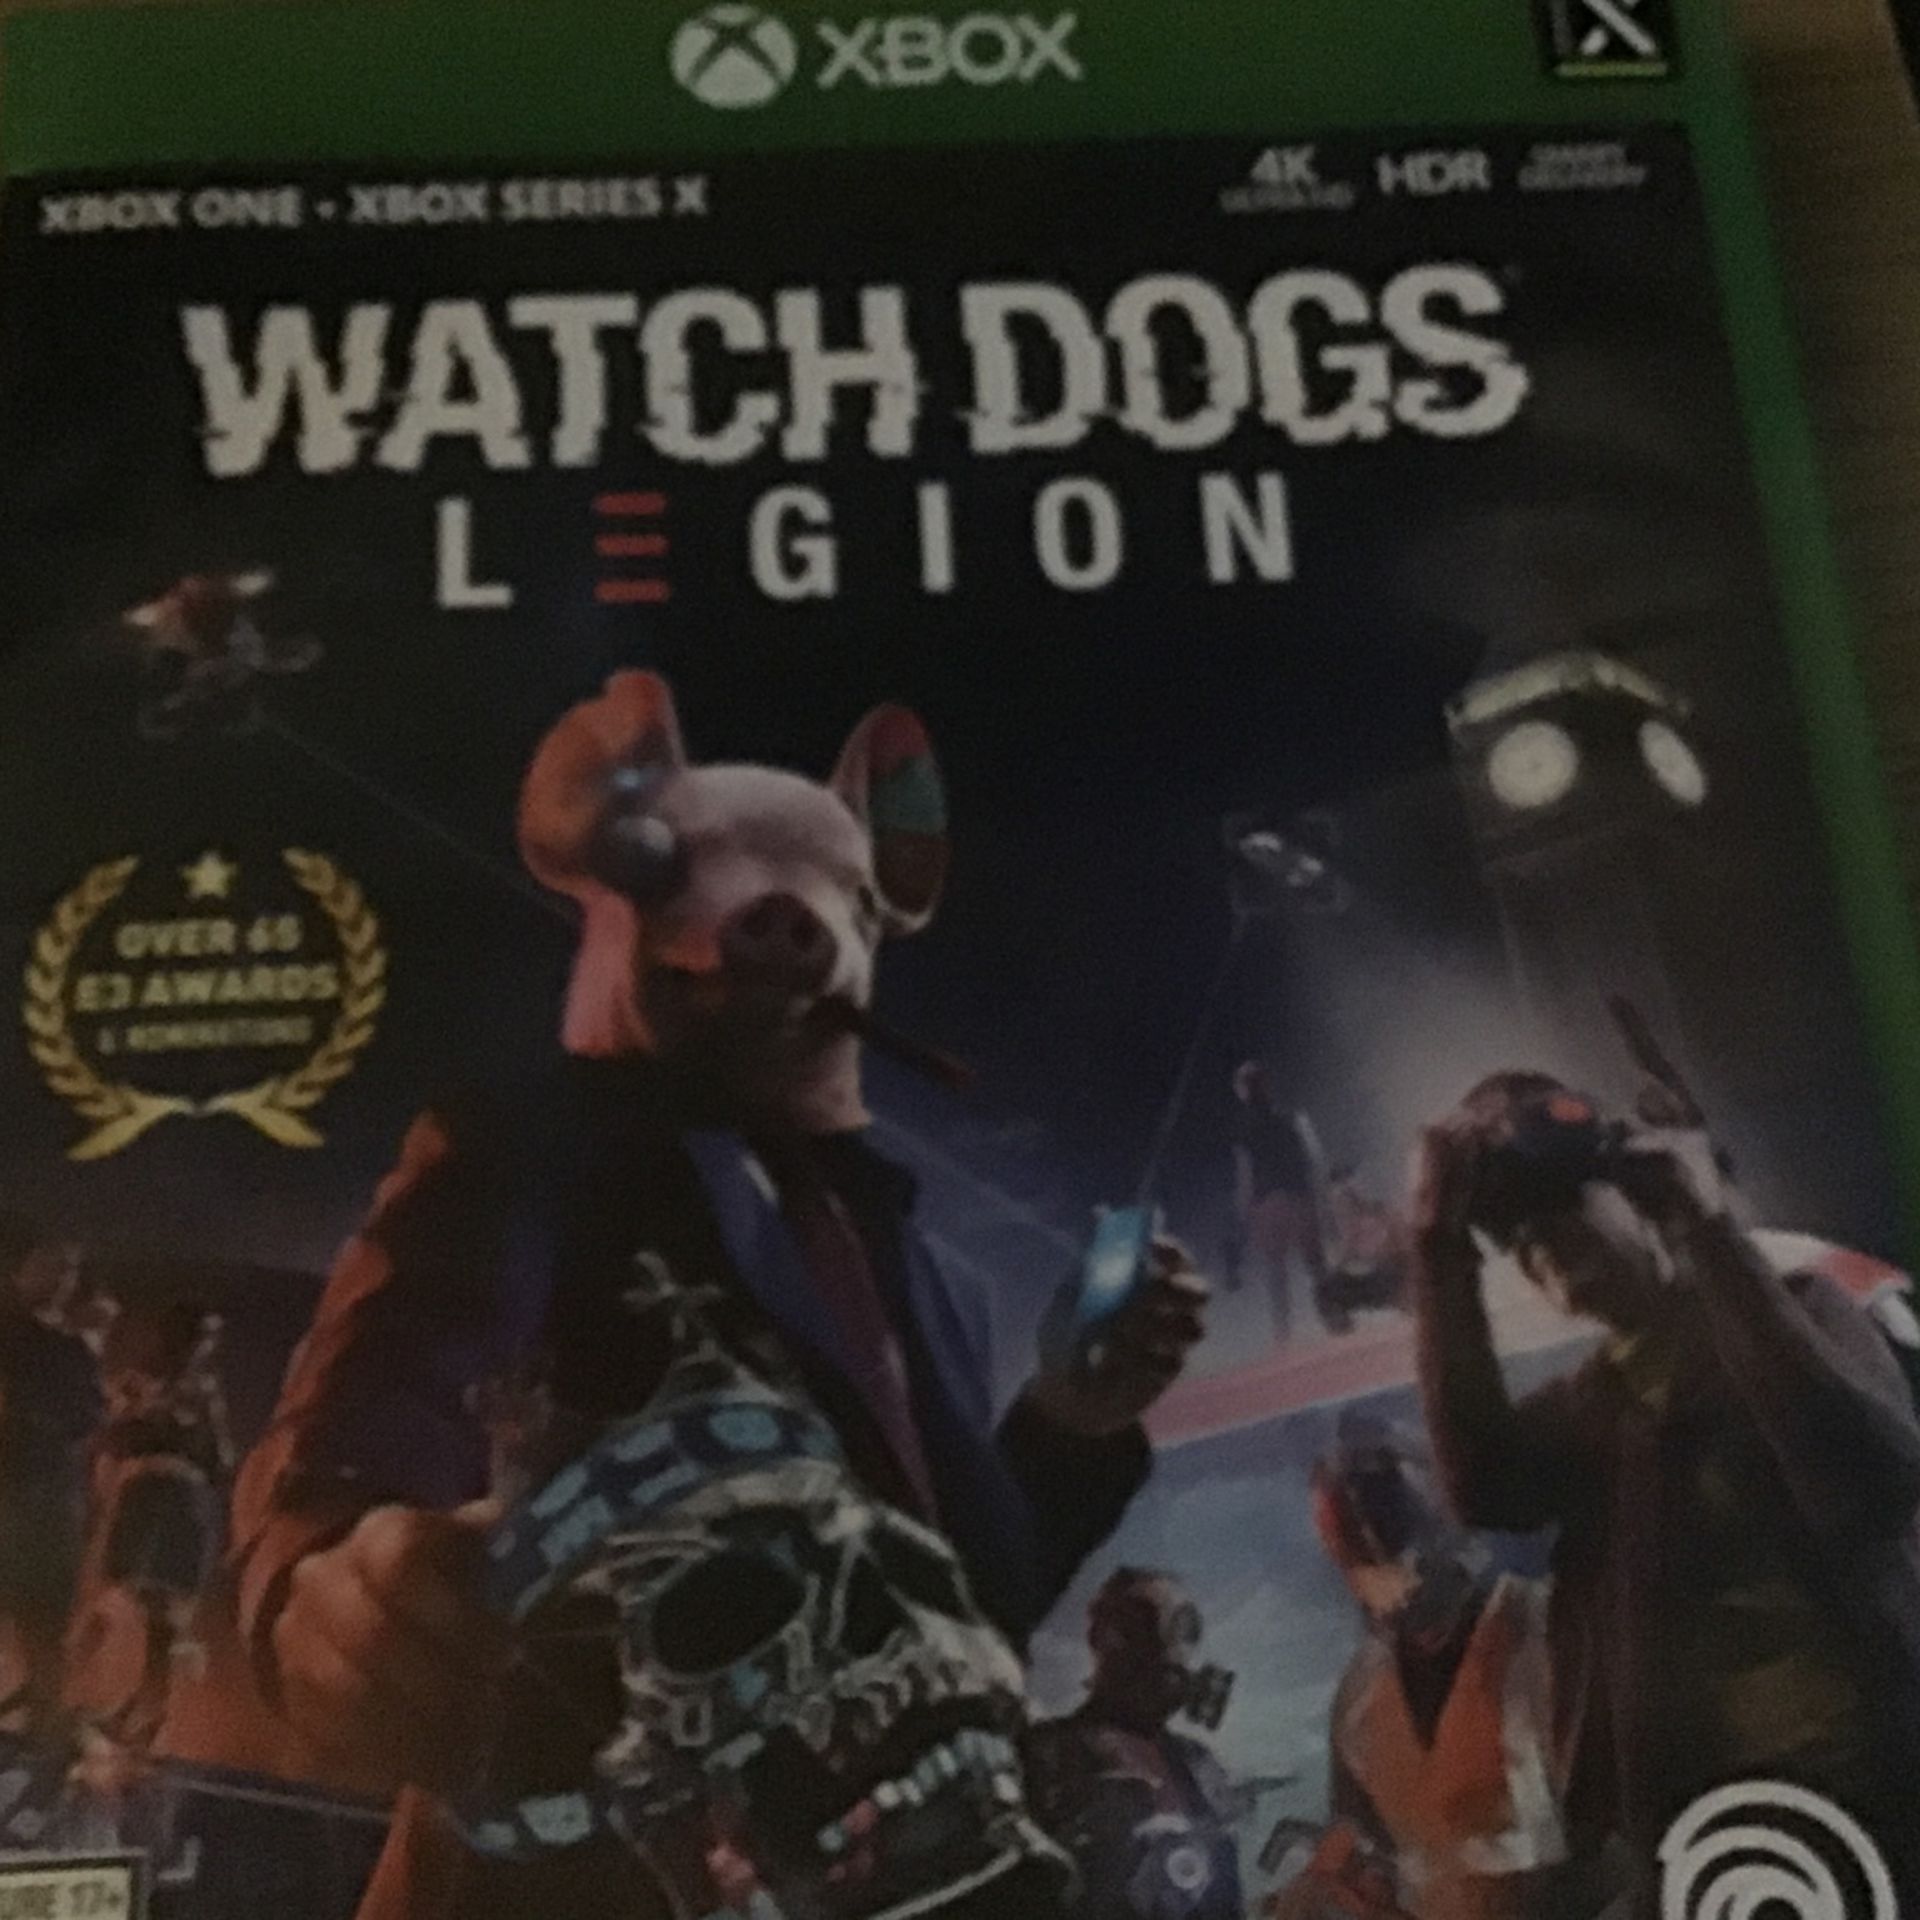 Watchdogs Legion